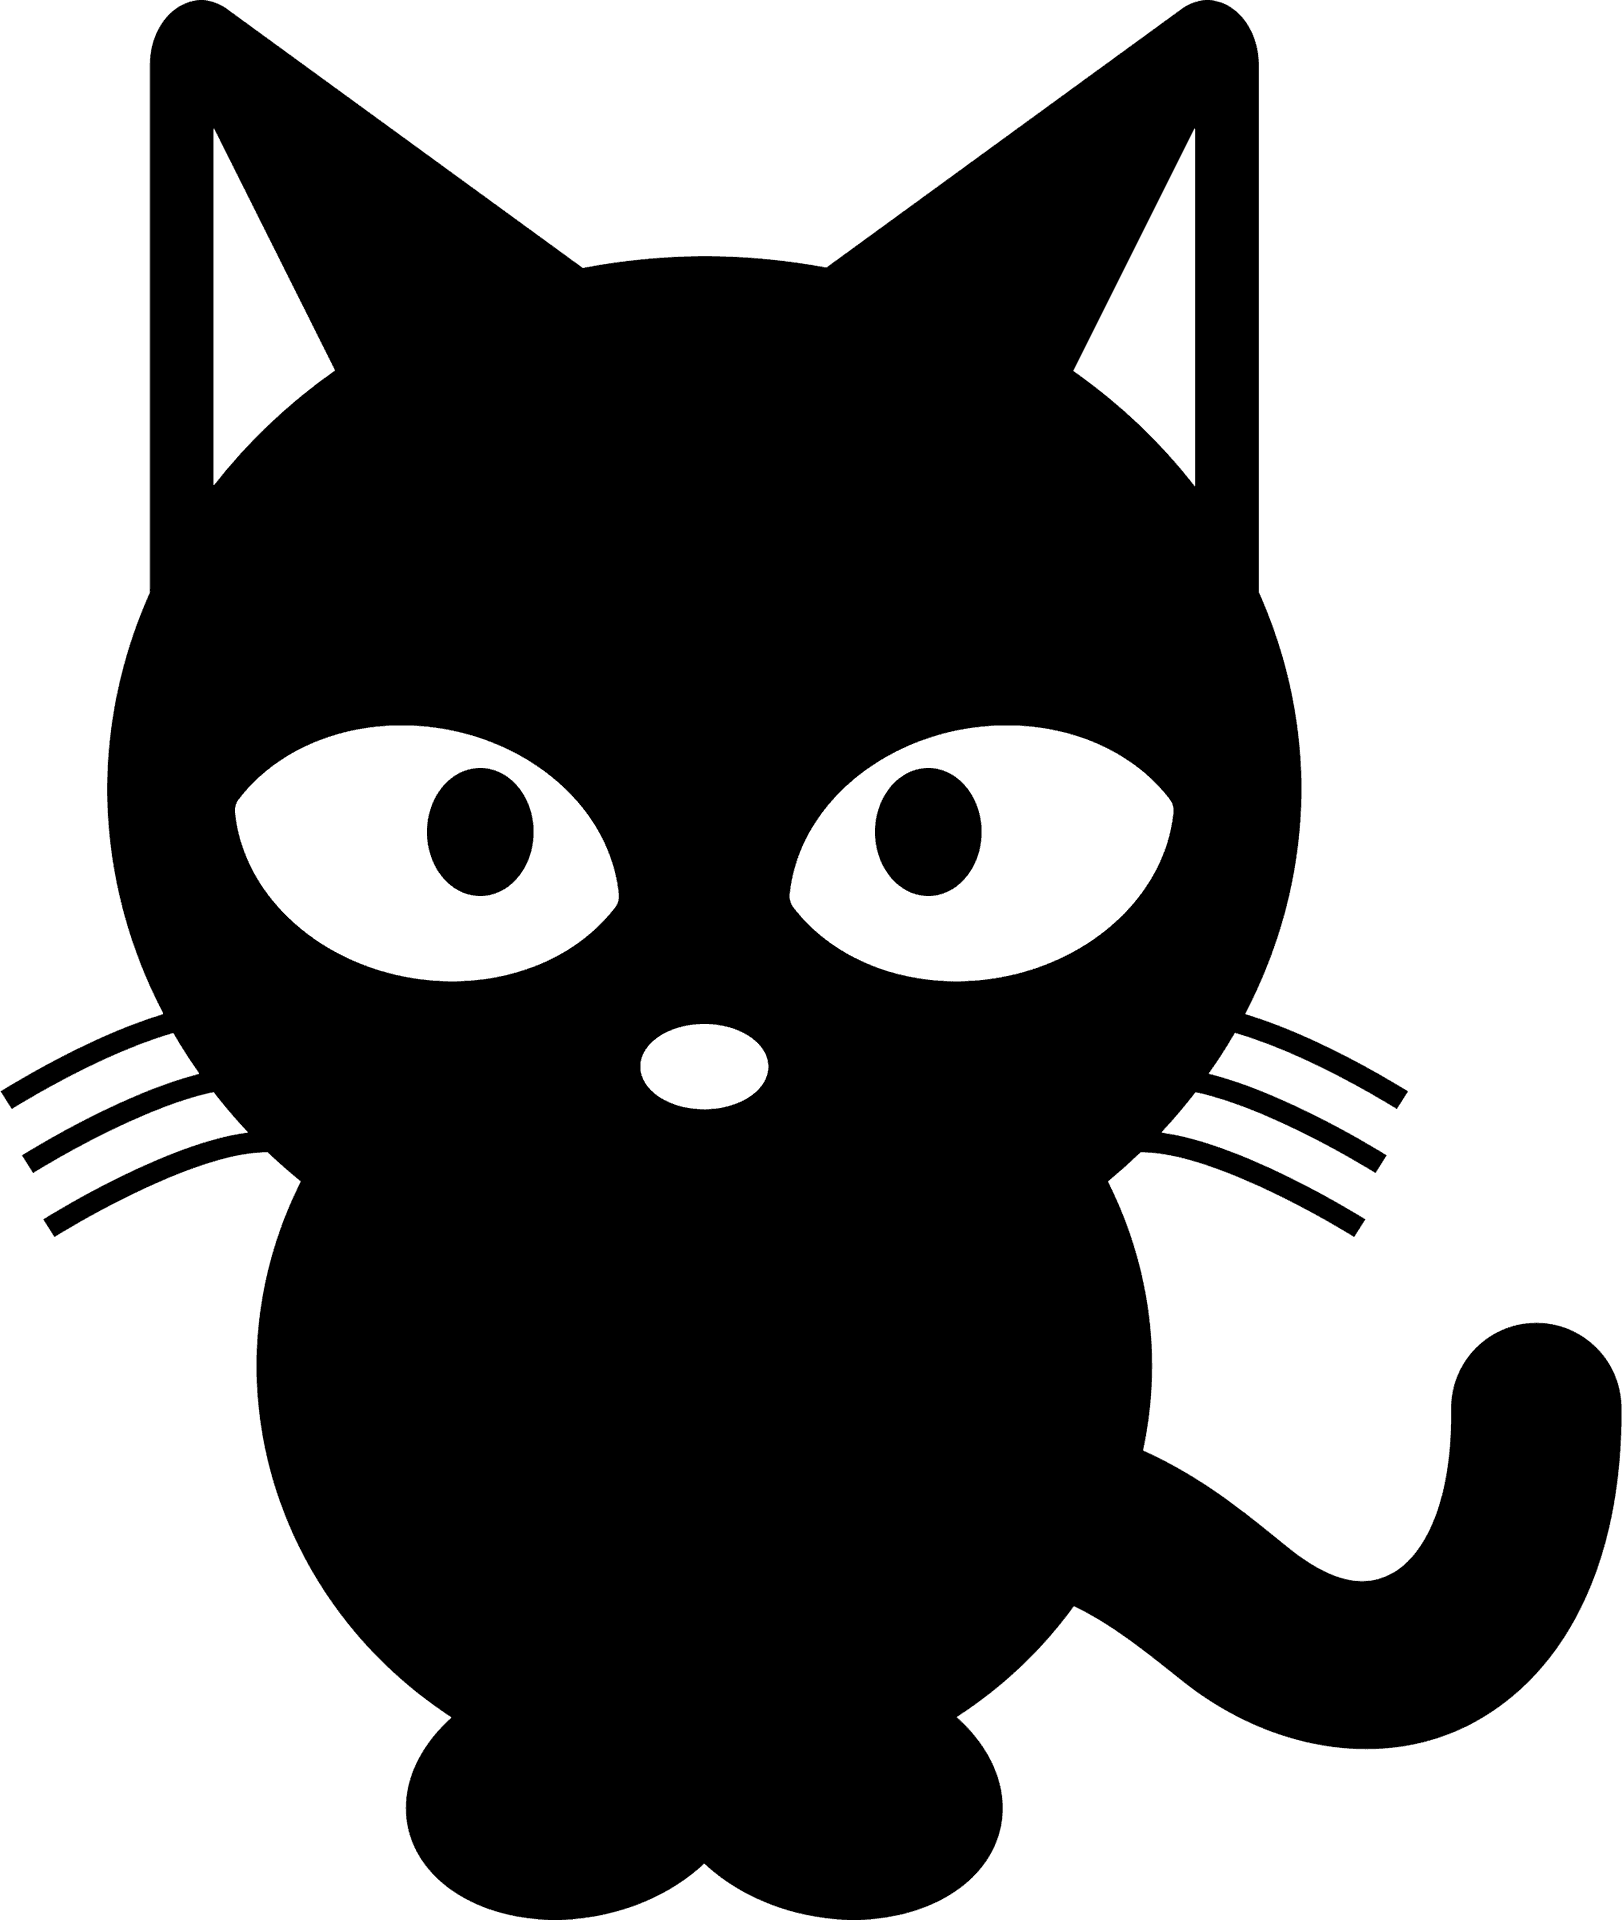 Black Cat Cartoon Graphic PNG image